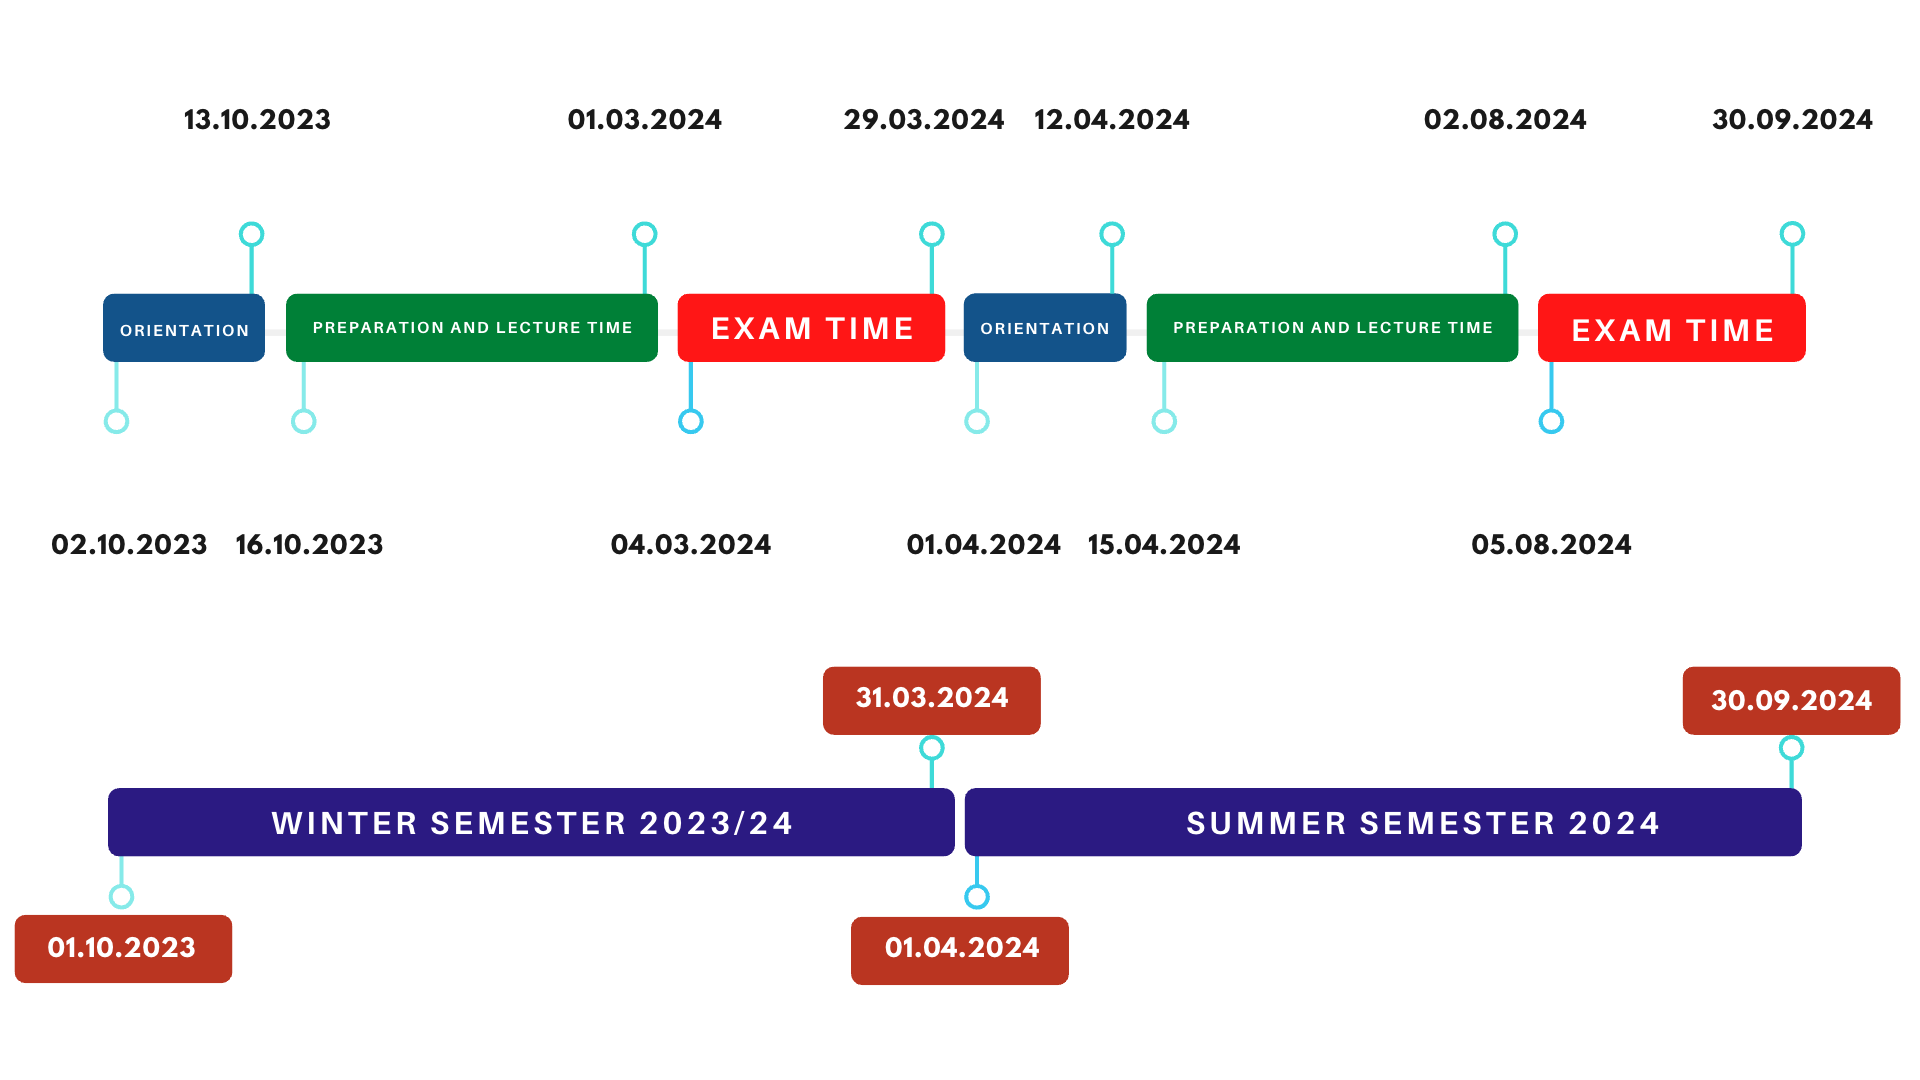 ATAFOM University Timeline 2023/24